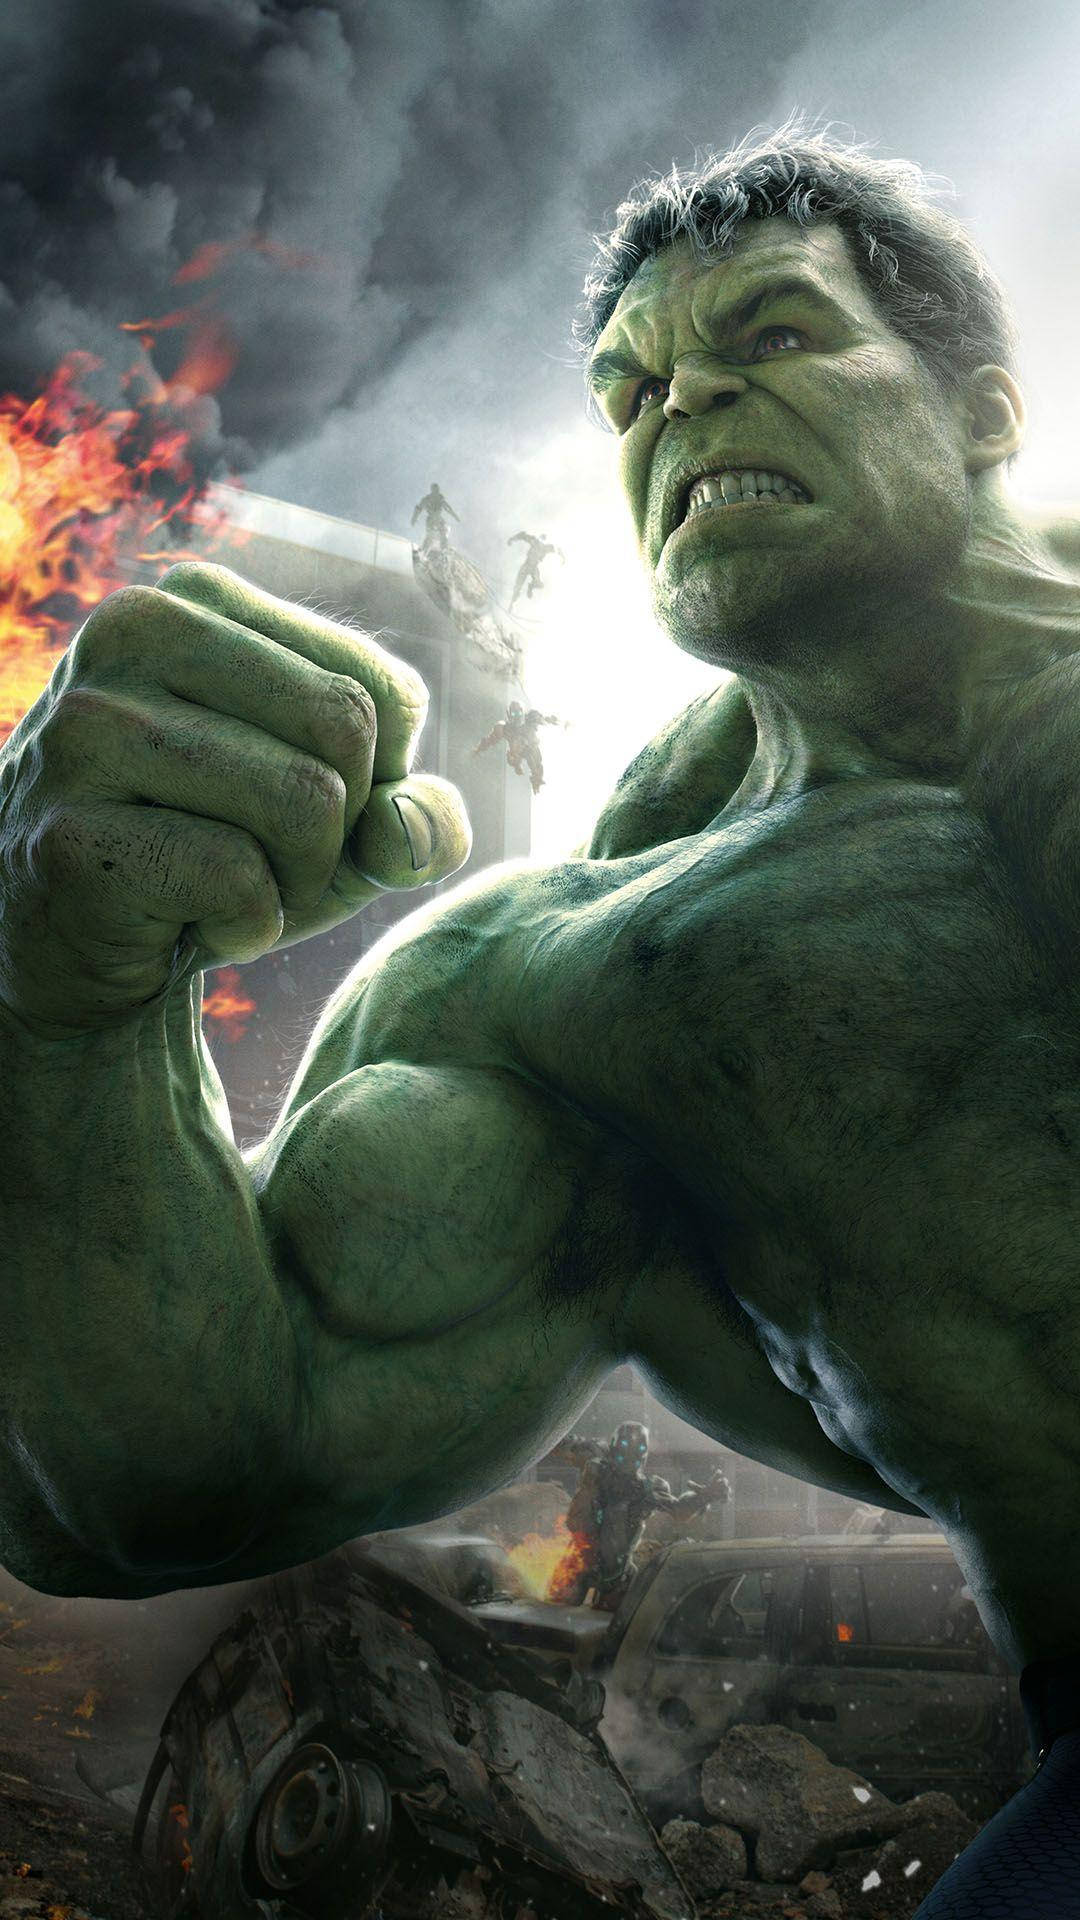 Fondode Pantalla Para Móvil En 4k De Hulk En La Película La Era De Ultrón. Fondo de pantalla